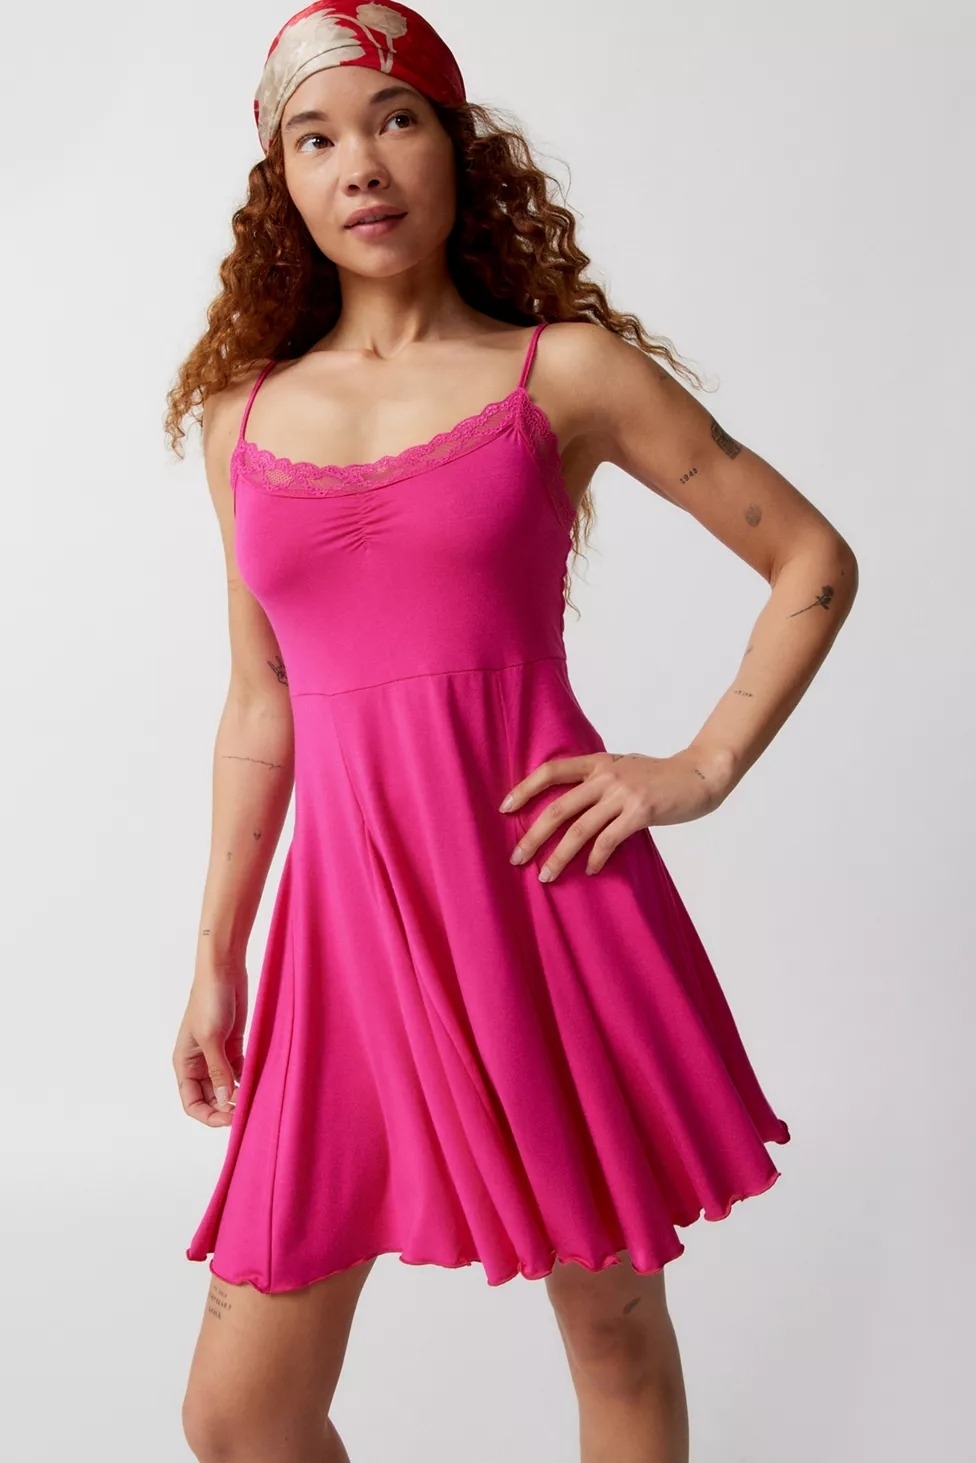 Model wearing lace trim mini dress in magenta